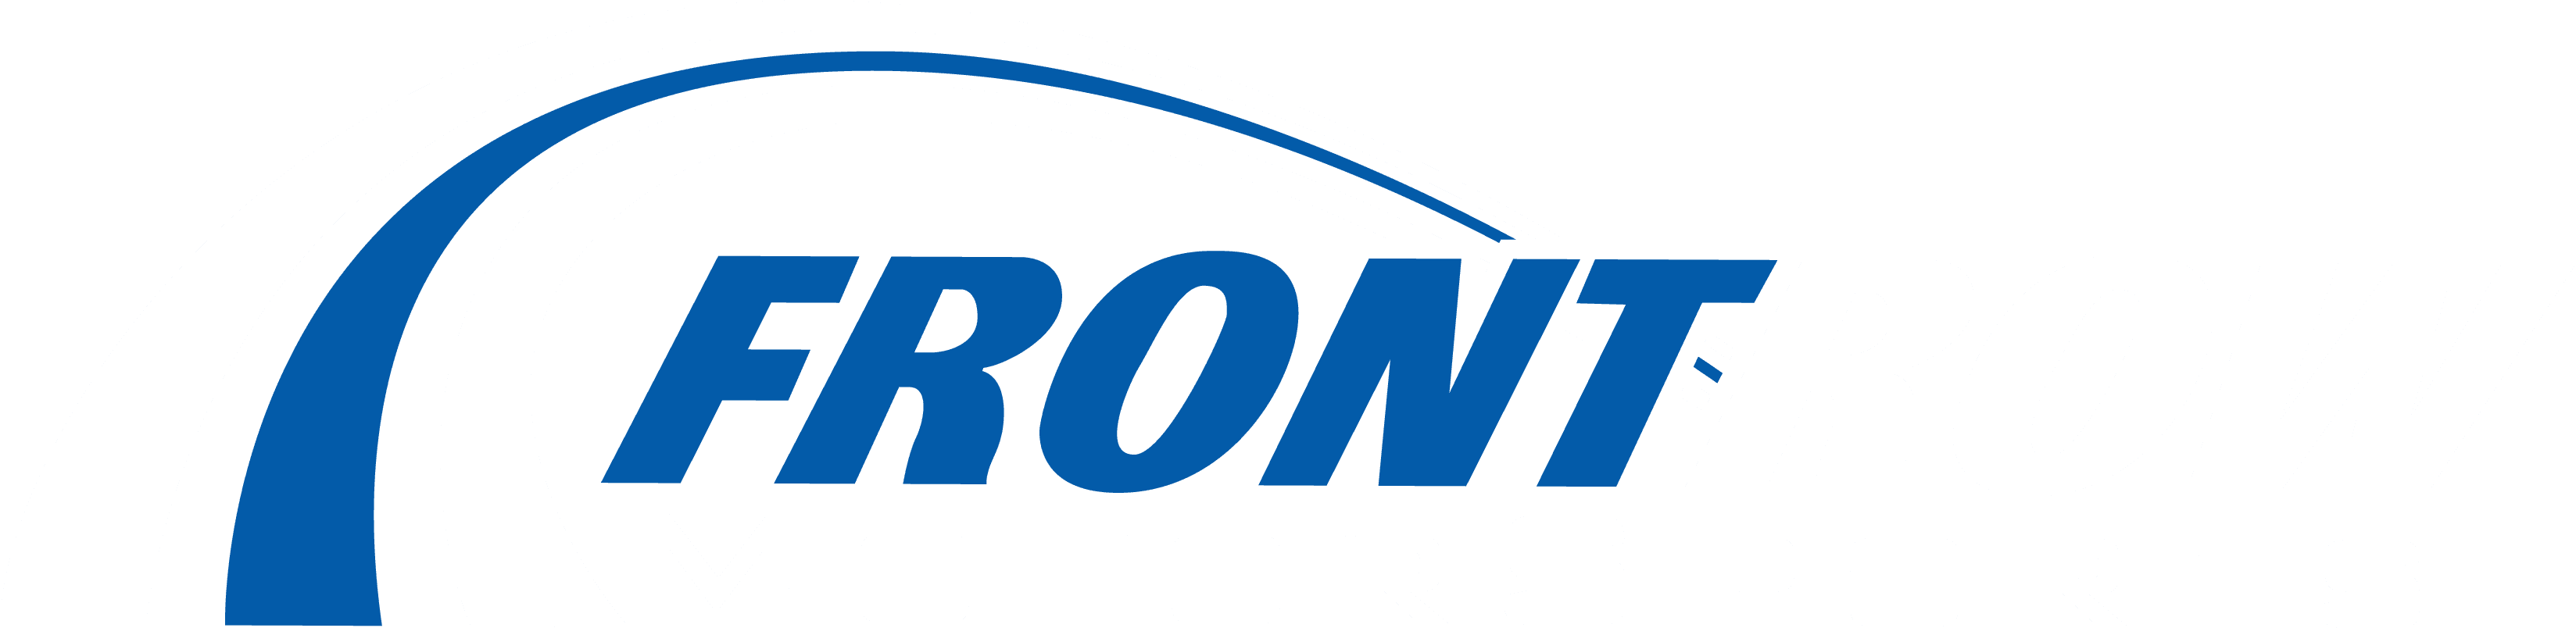 zaneSponsorshipP08-frontrow-motorsports-logo.png